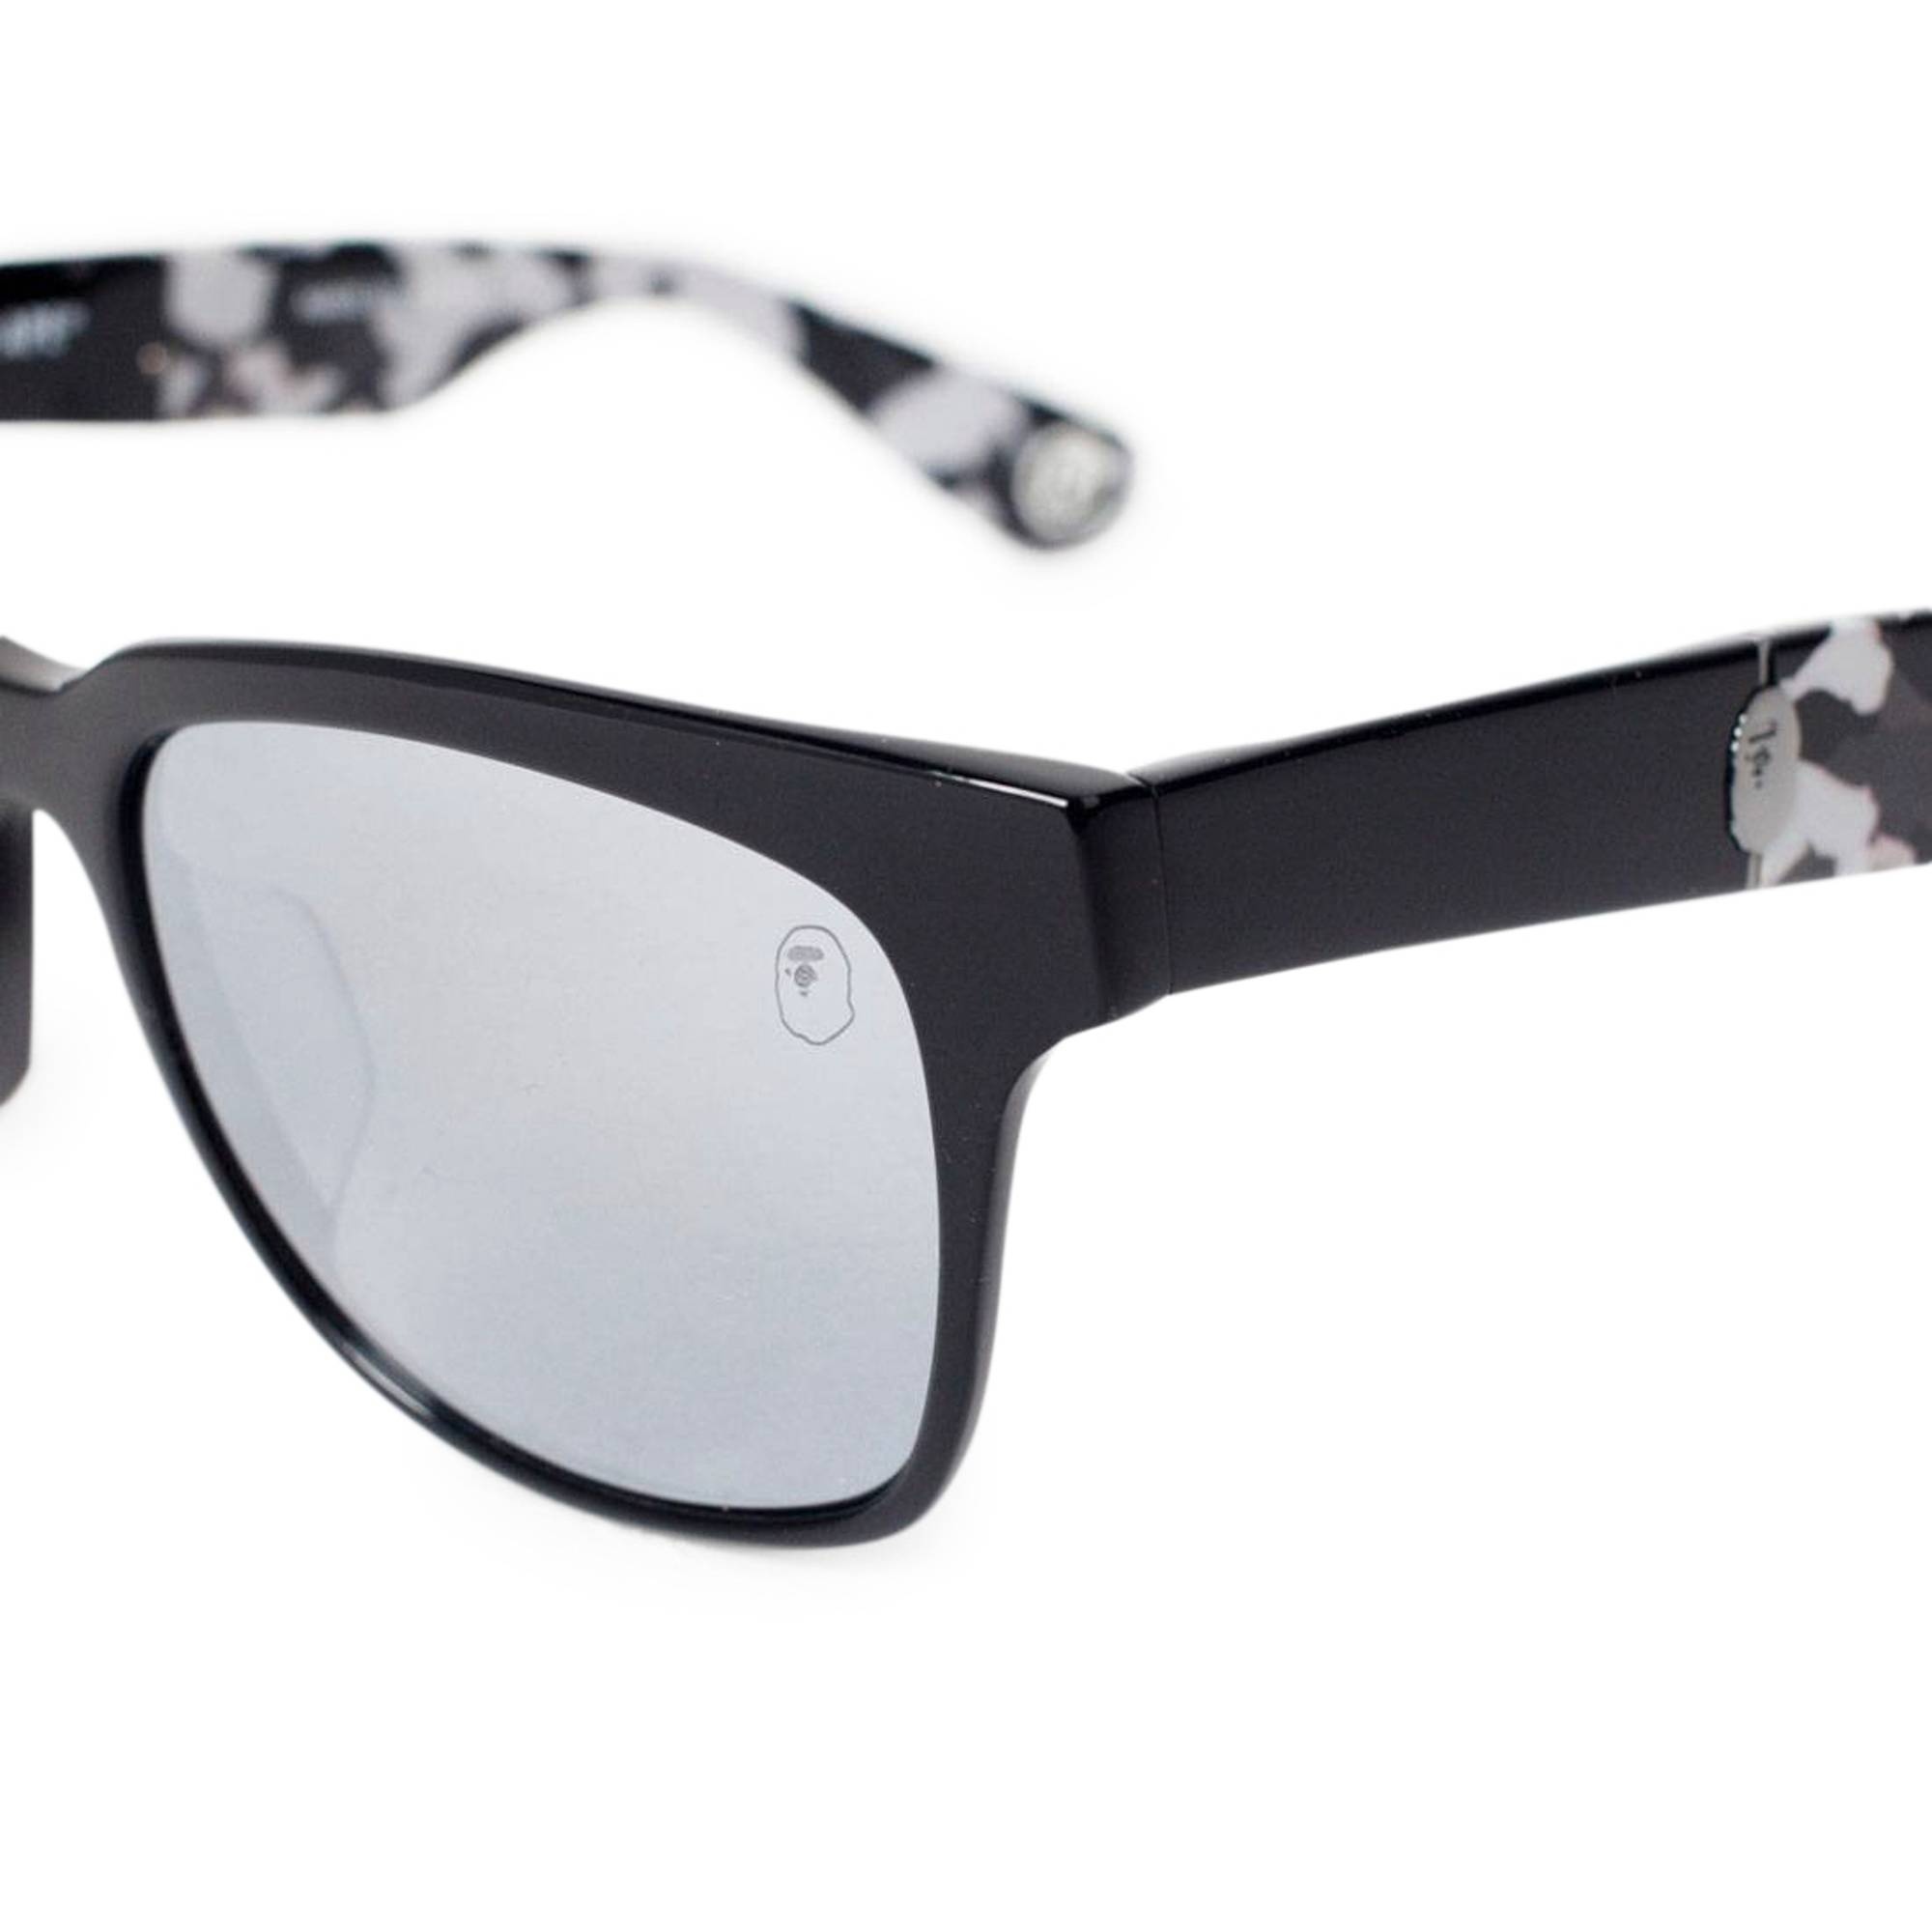 BAPE Sunglasses 'Black' - 3